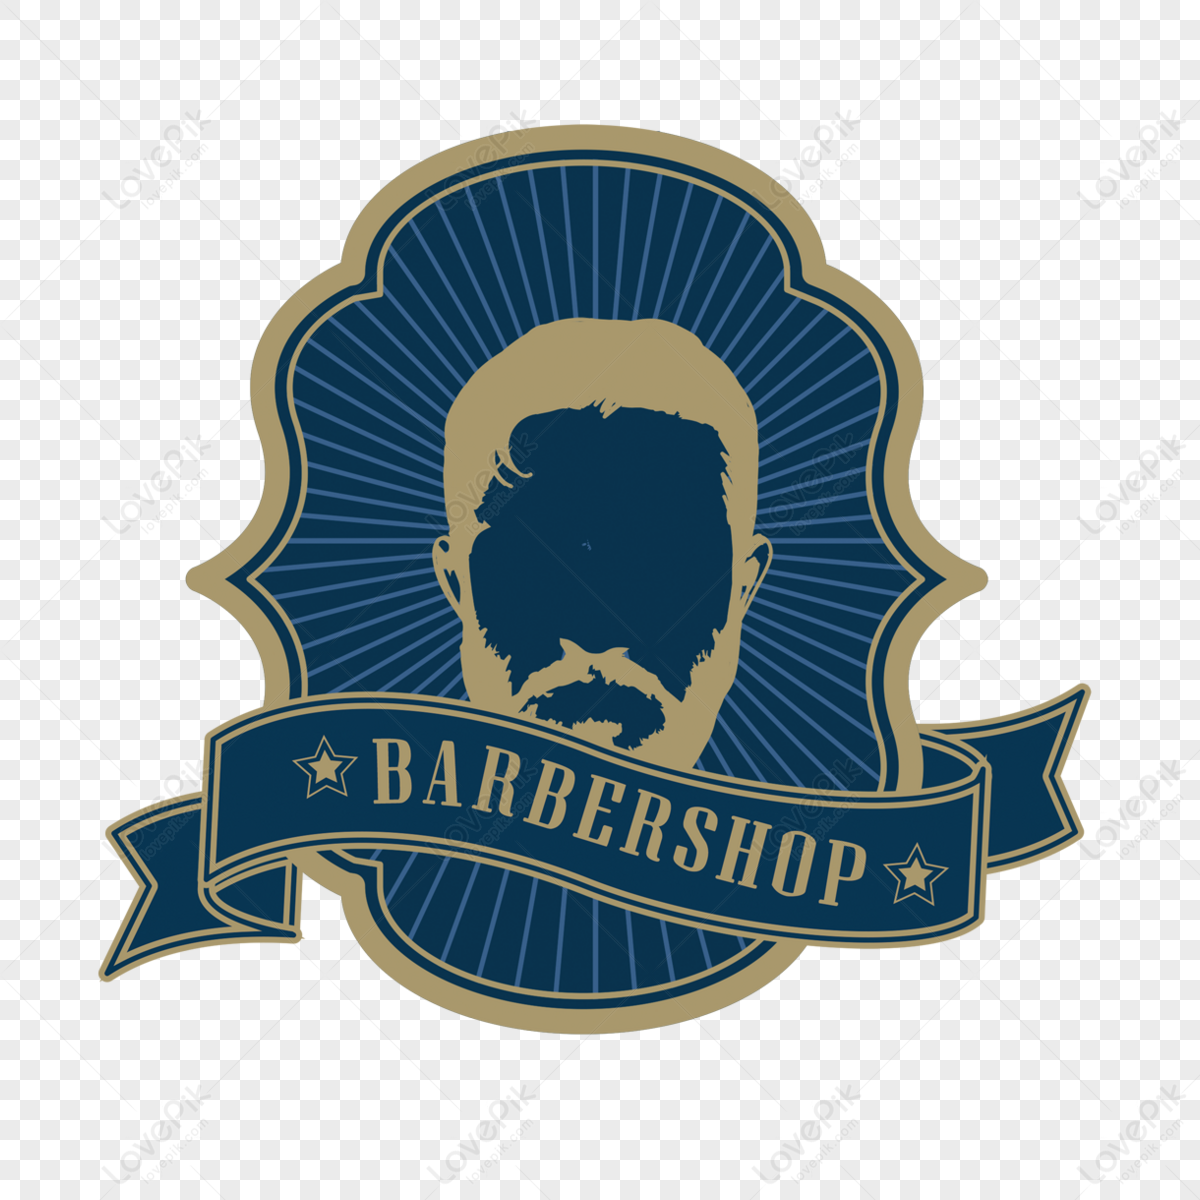 Barbershop Logo Collection Graphic by rukurustudio · Creative Fabrica